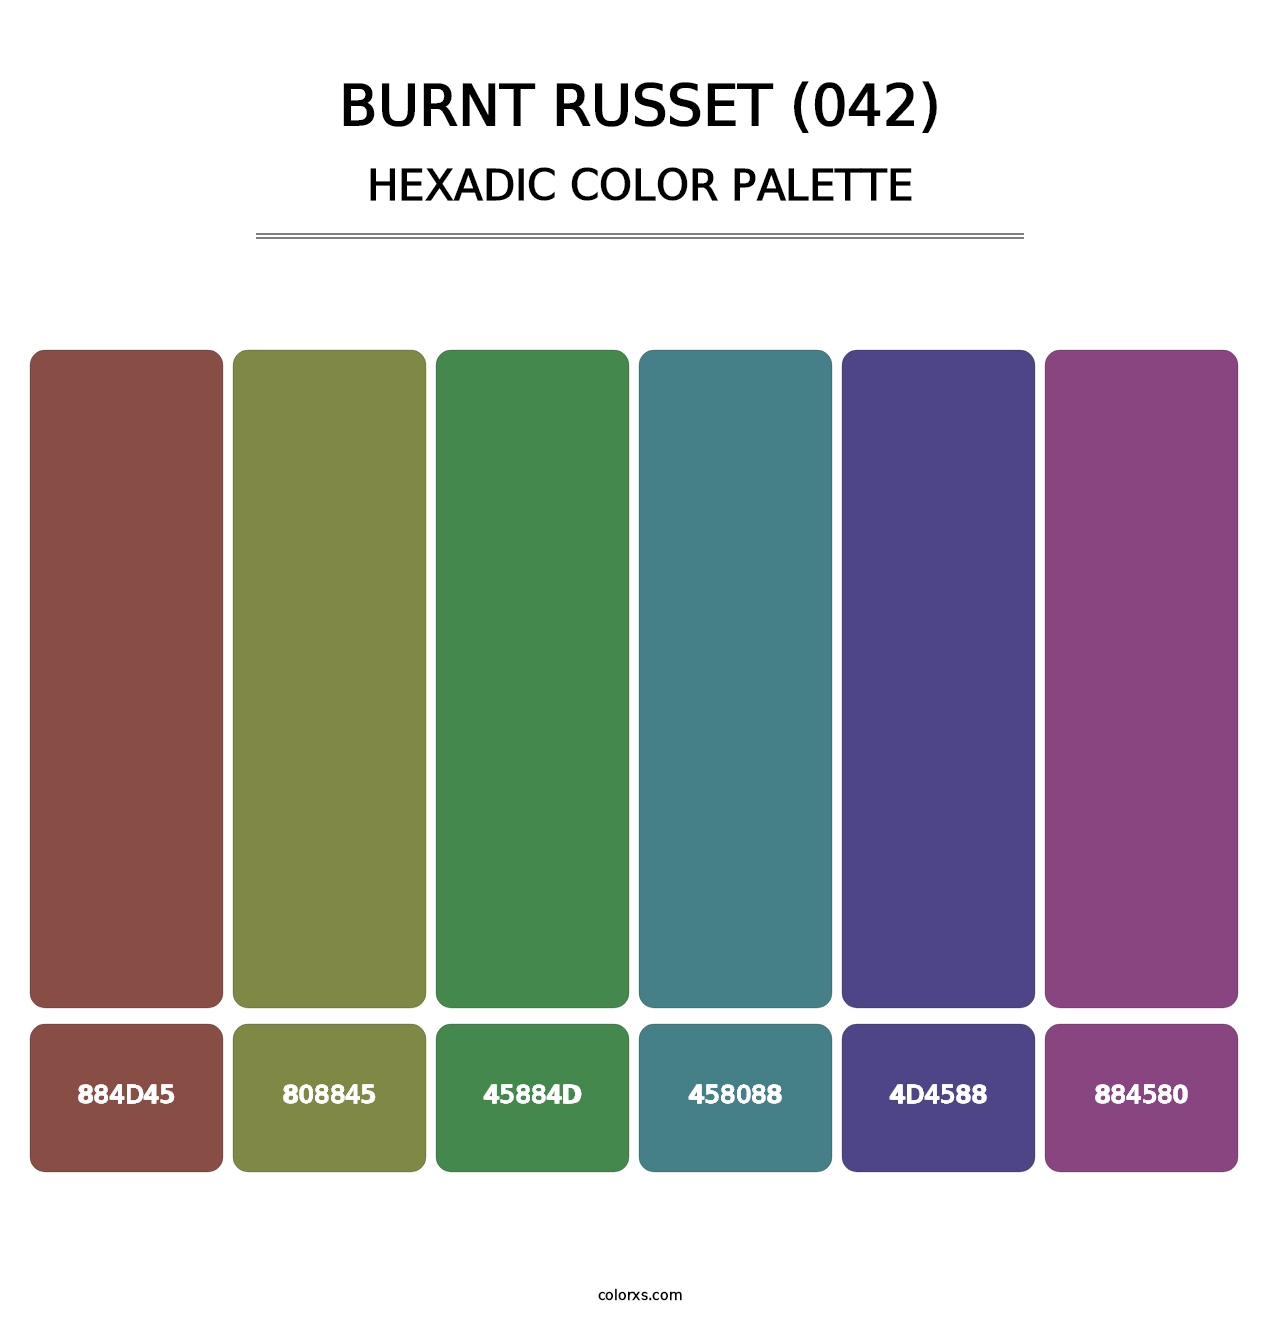 Burnt Russet (042) - Hexadic Color Palette